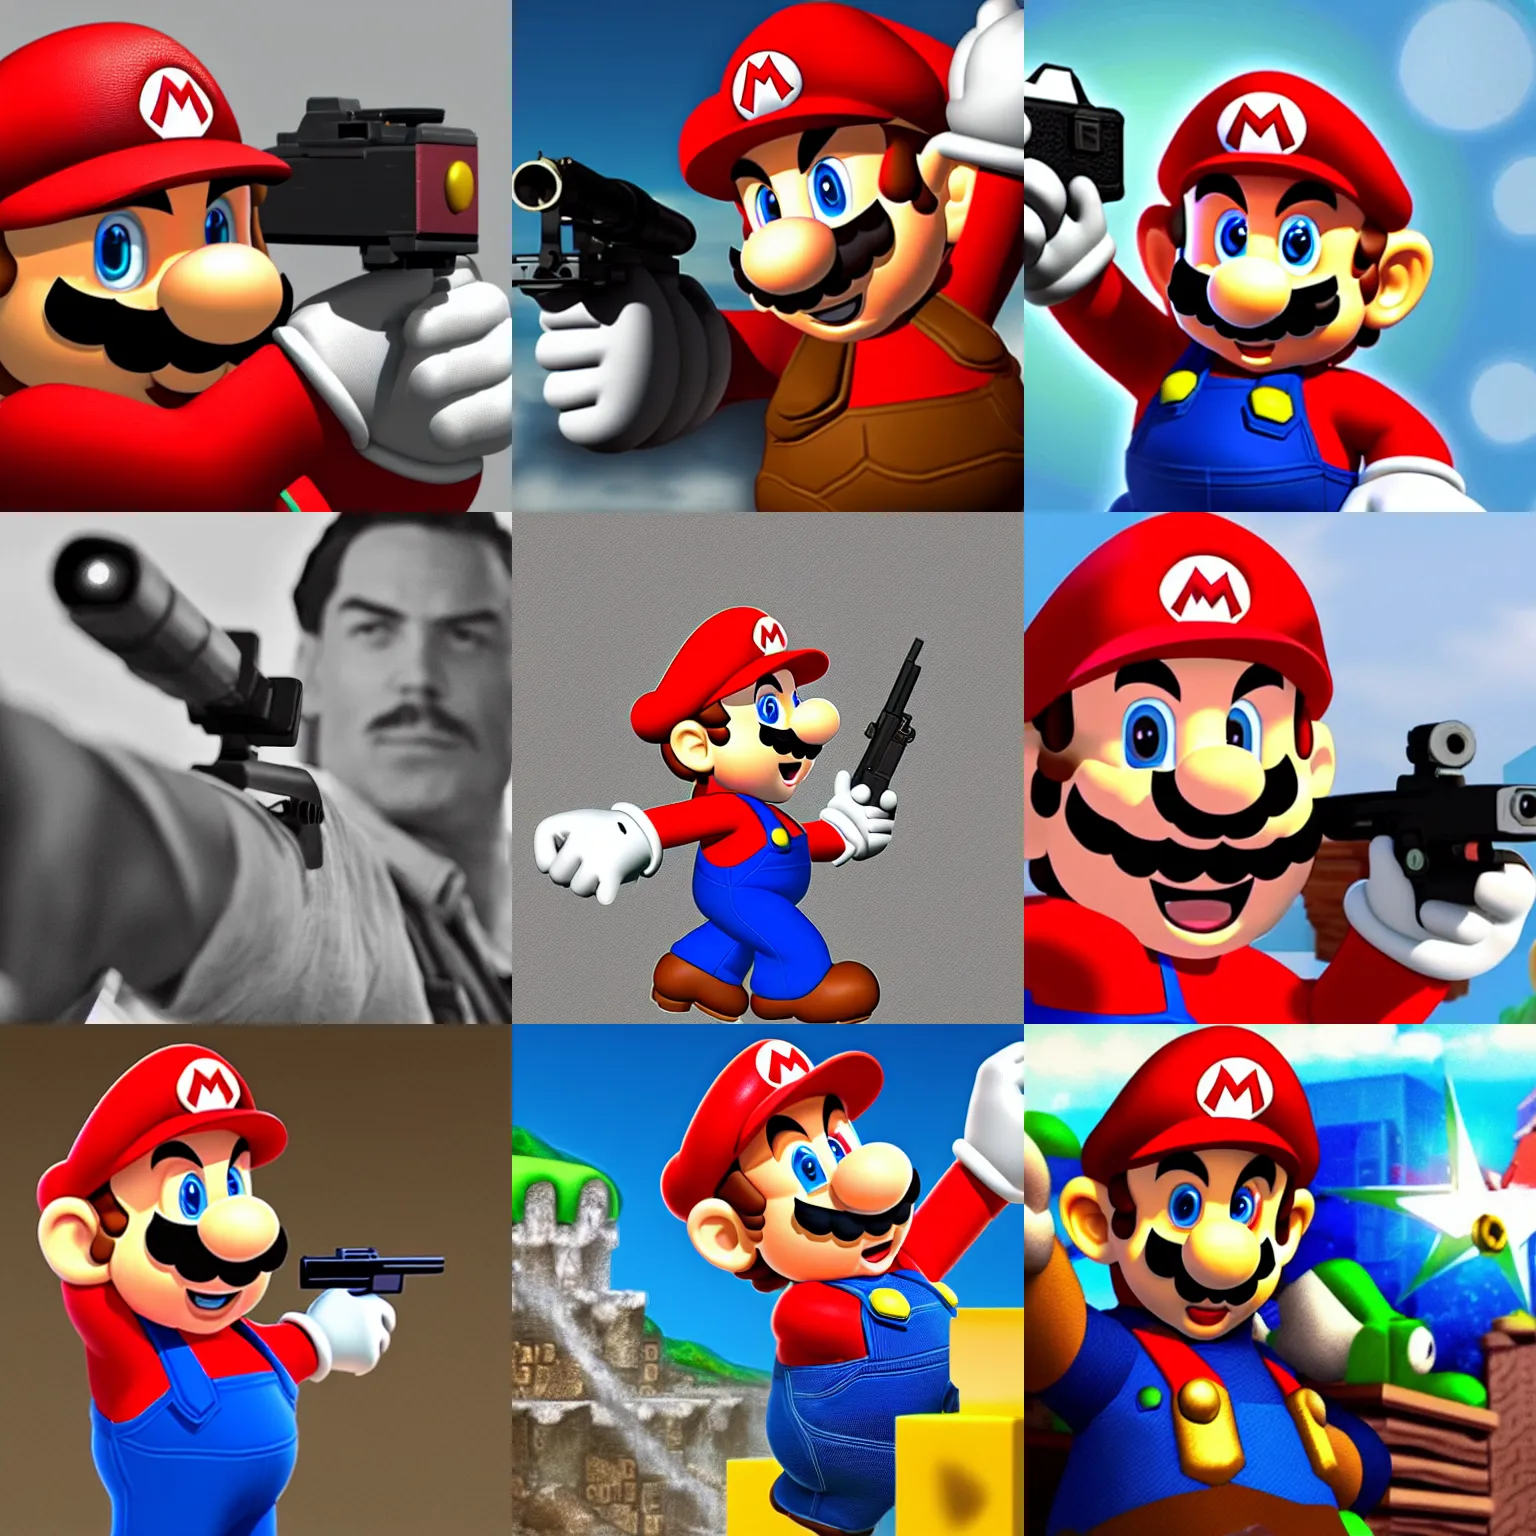 Prompt: Mario pointing a gun at the camera